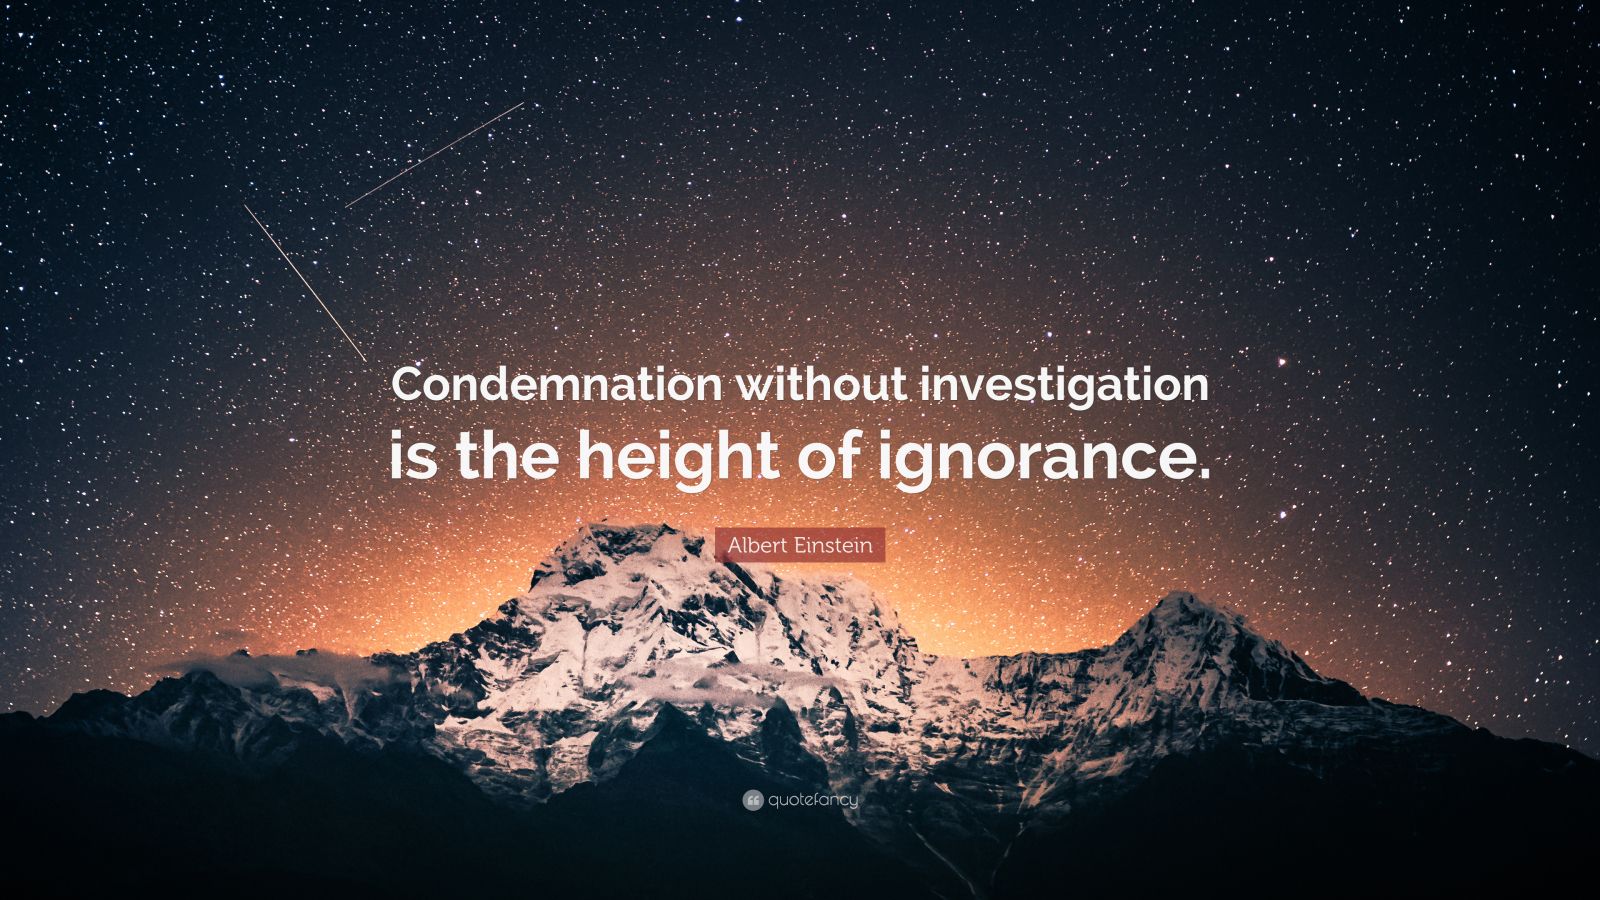 Albert Einstein Quote: “Condemnation without investigation is the